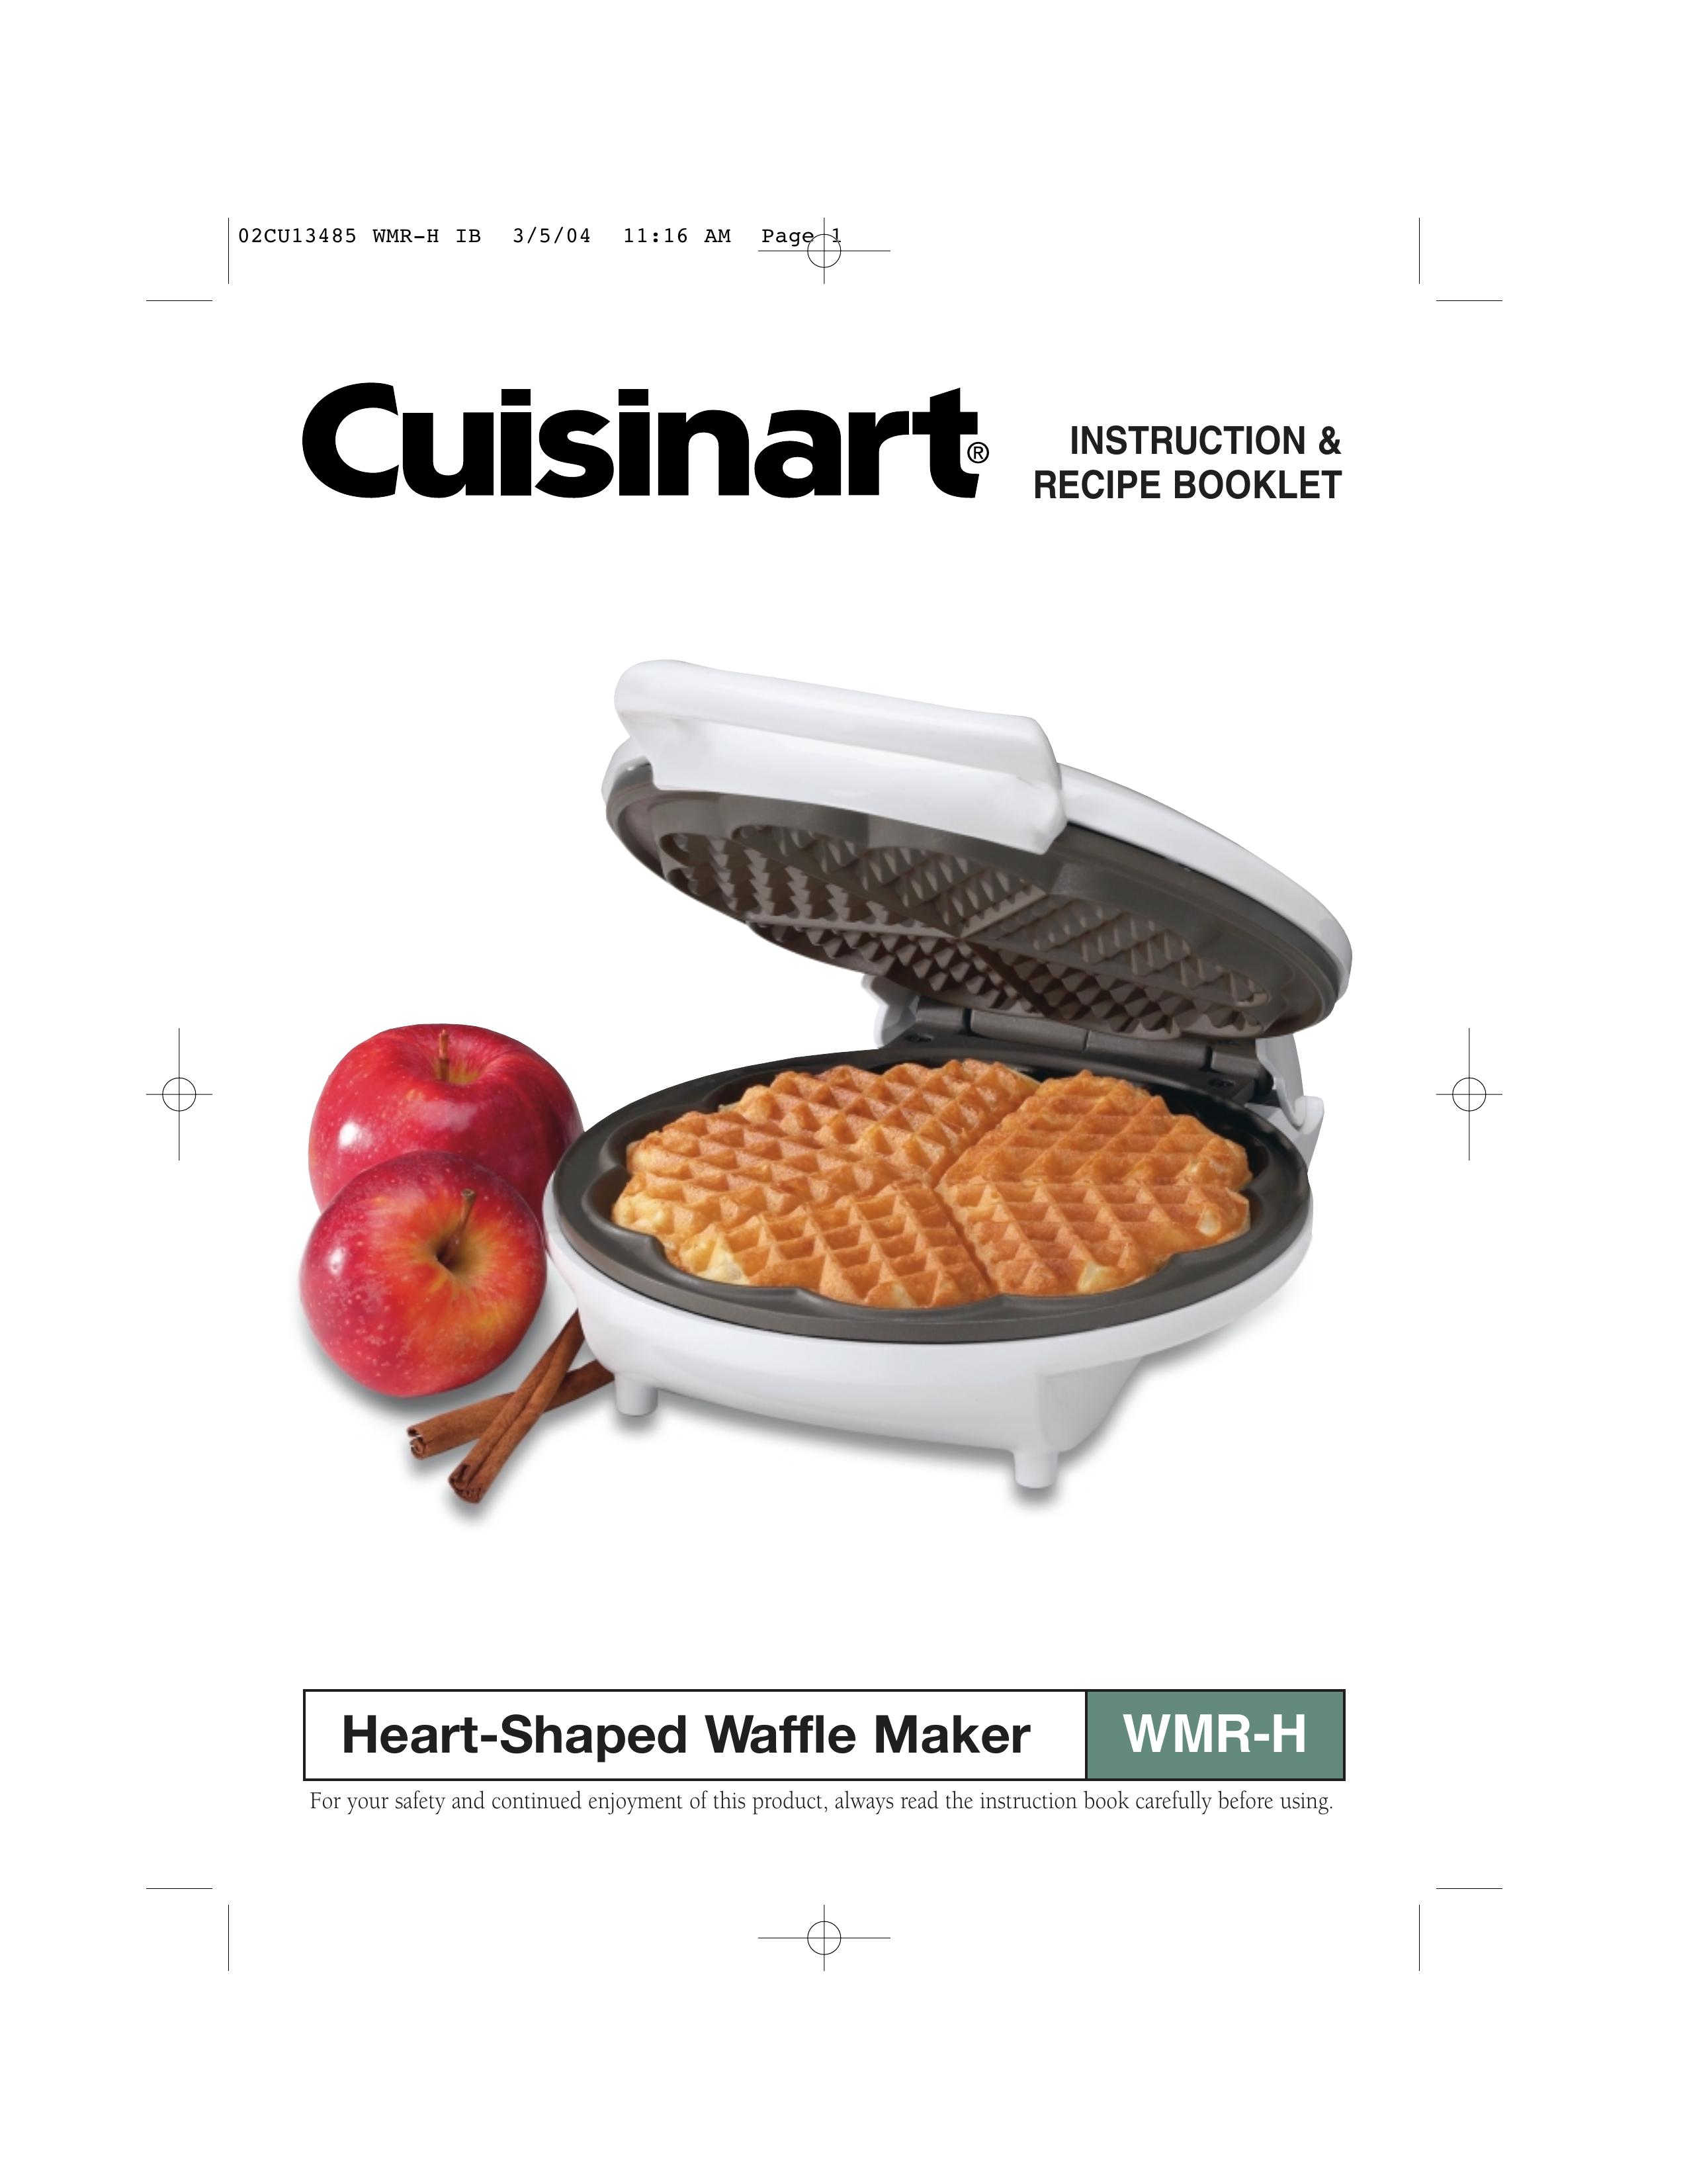 Cuisinart WMR-H Waffle Iron User Manual